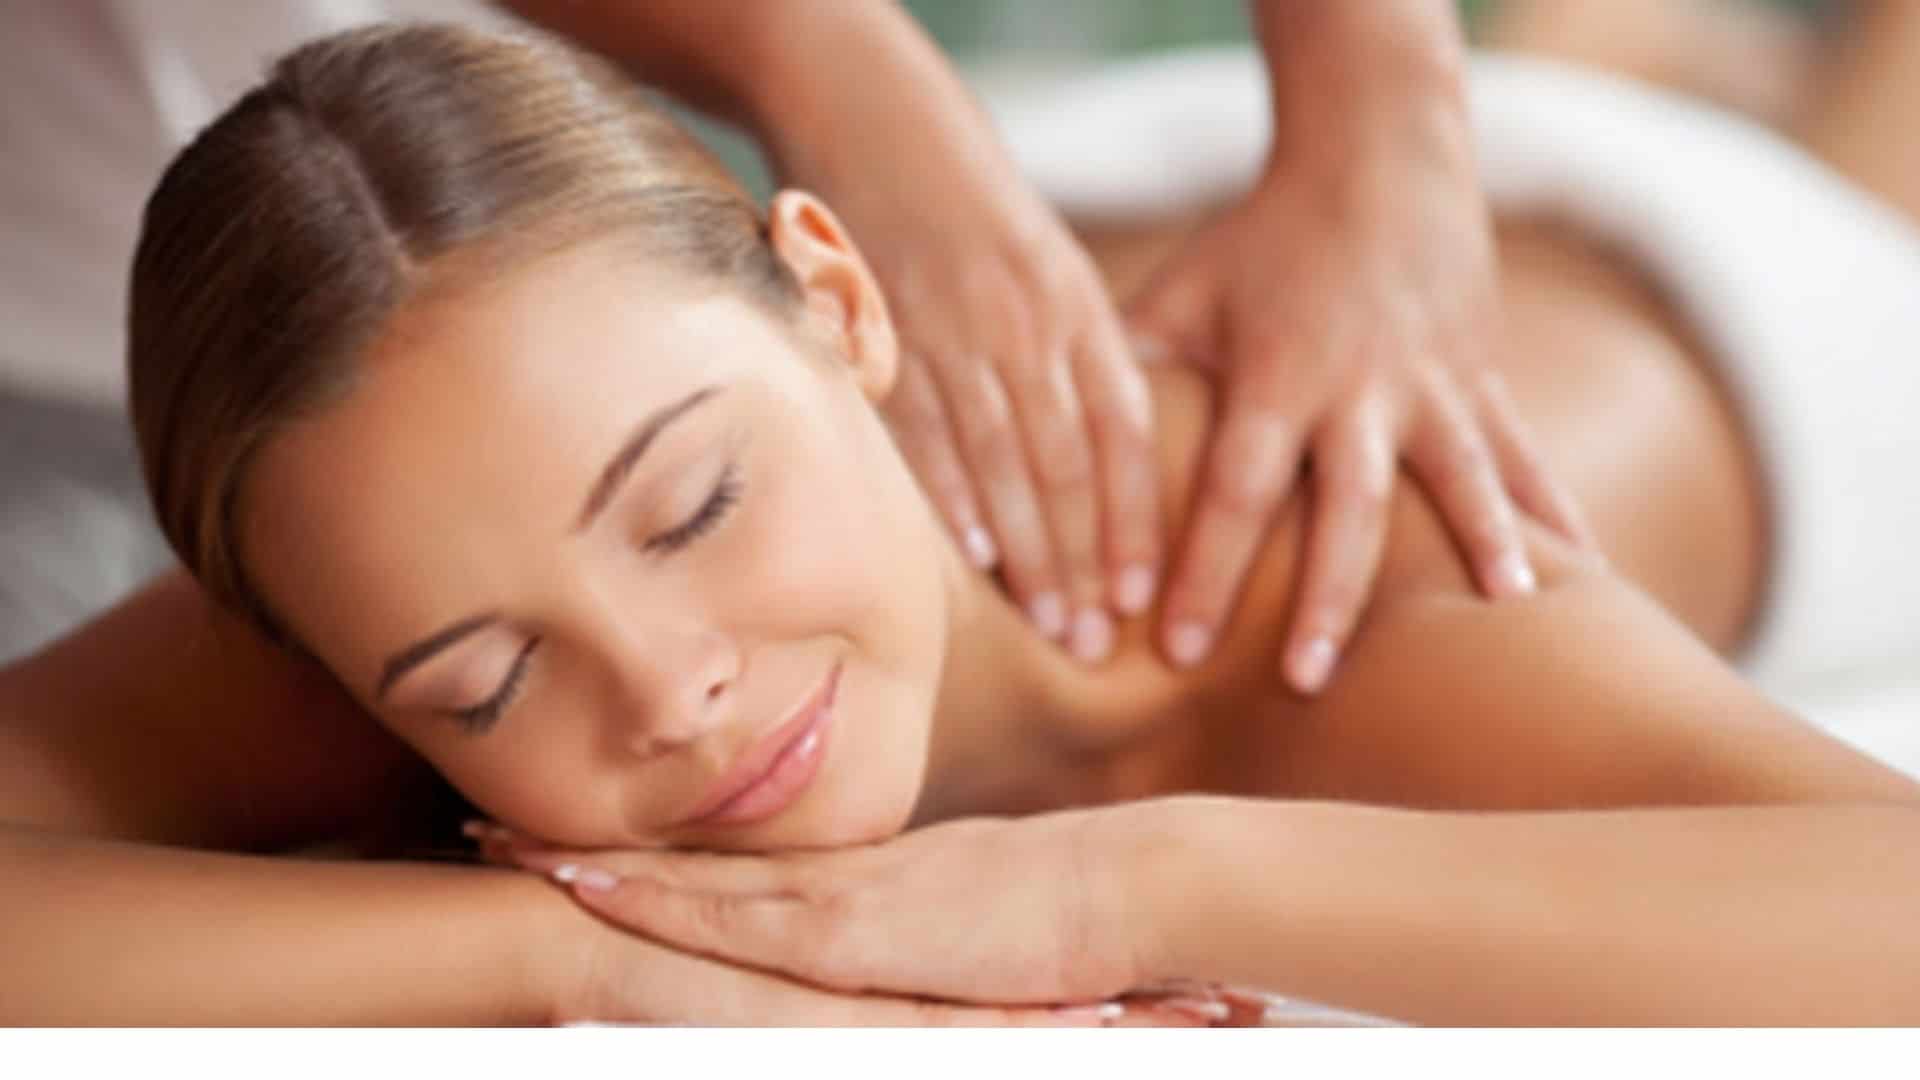 women lying on her stomach enjoying shoulder massage